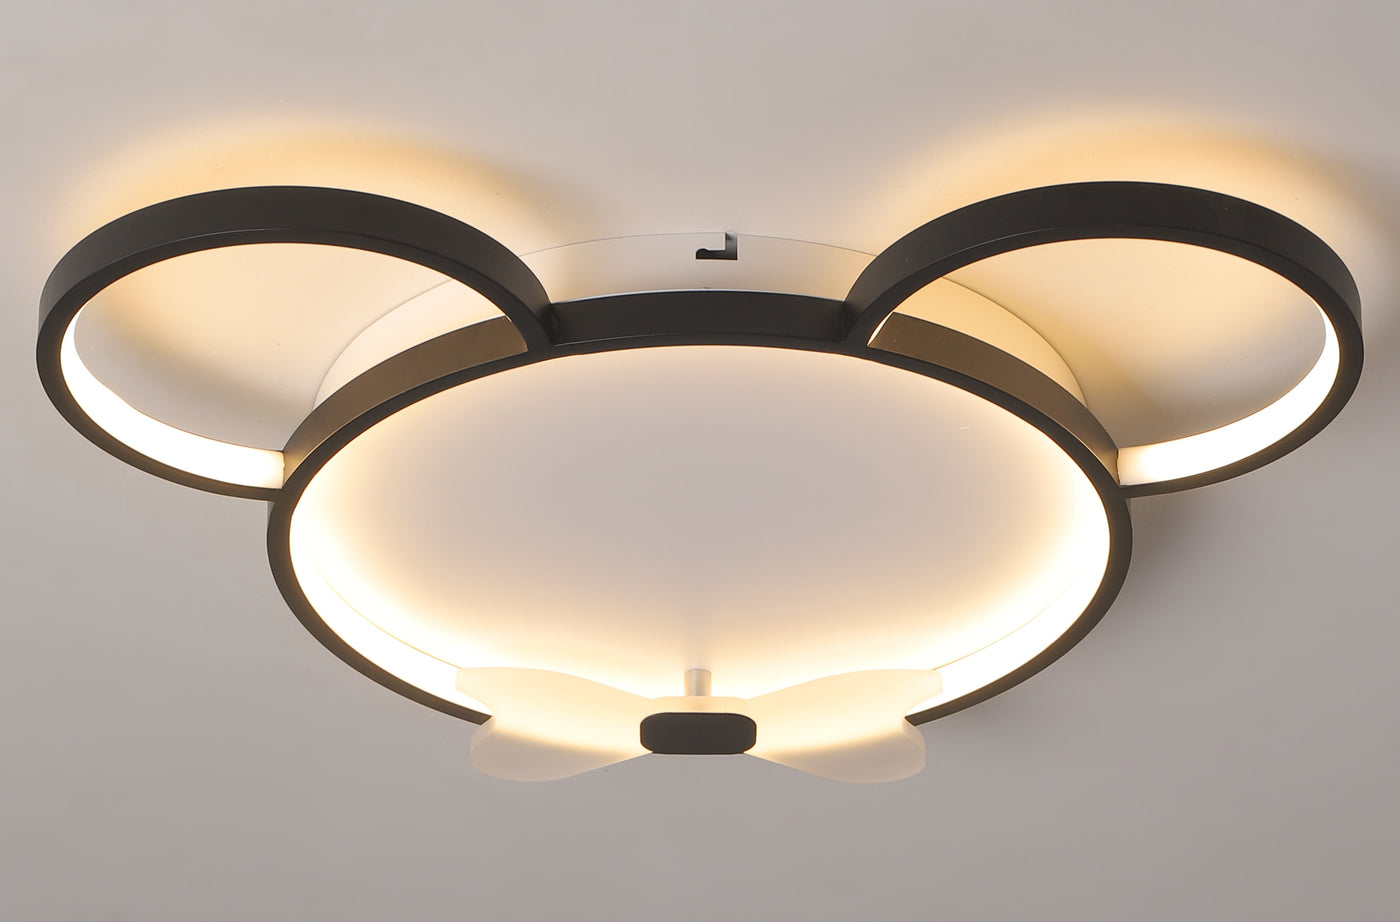 3-Lights Micky Mouse Shape Design Flush Mount Lighting